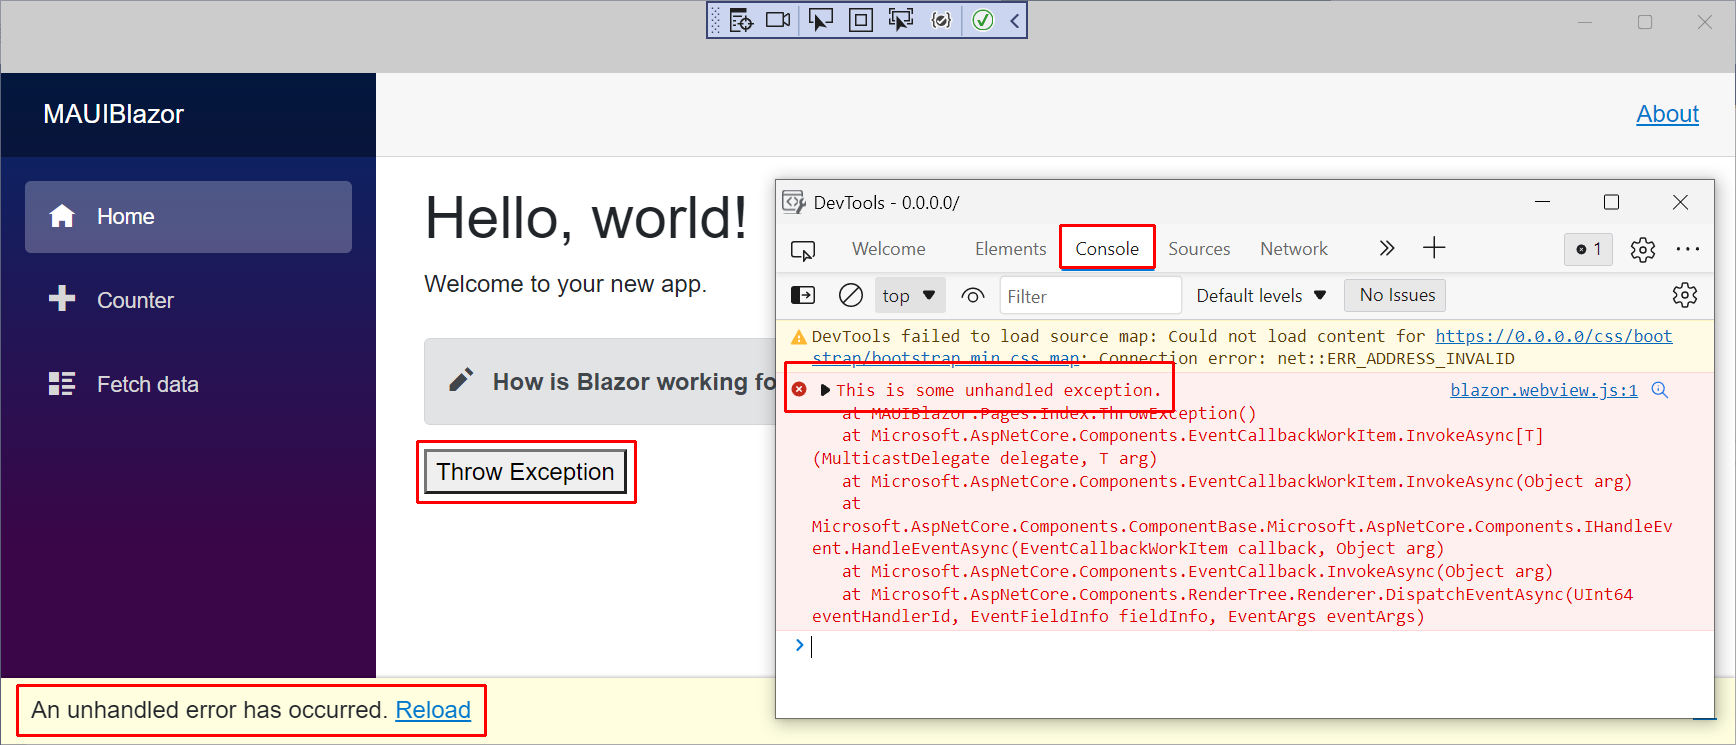 Microsoft Edge DevTools window for a Blazor Hybrid app running on Windows